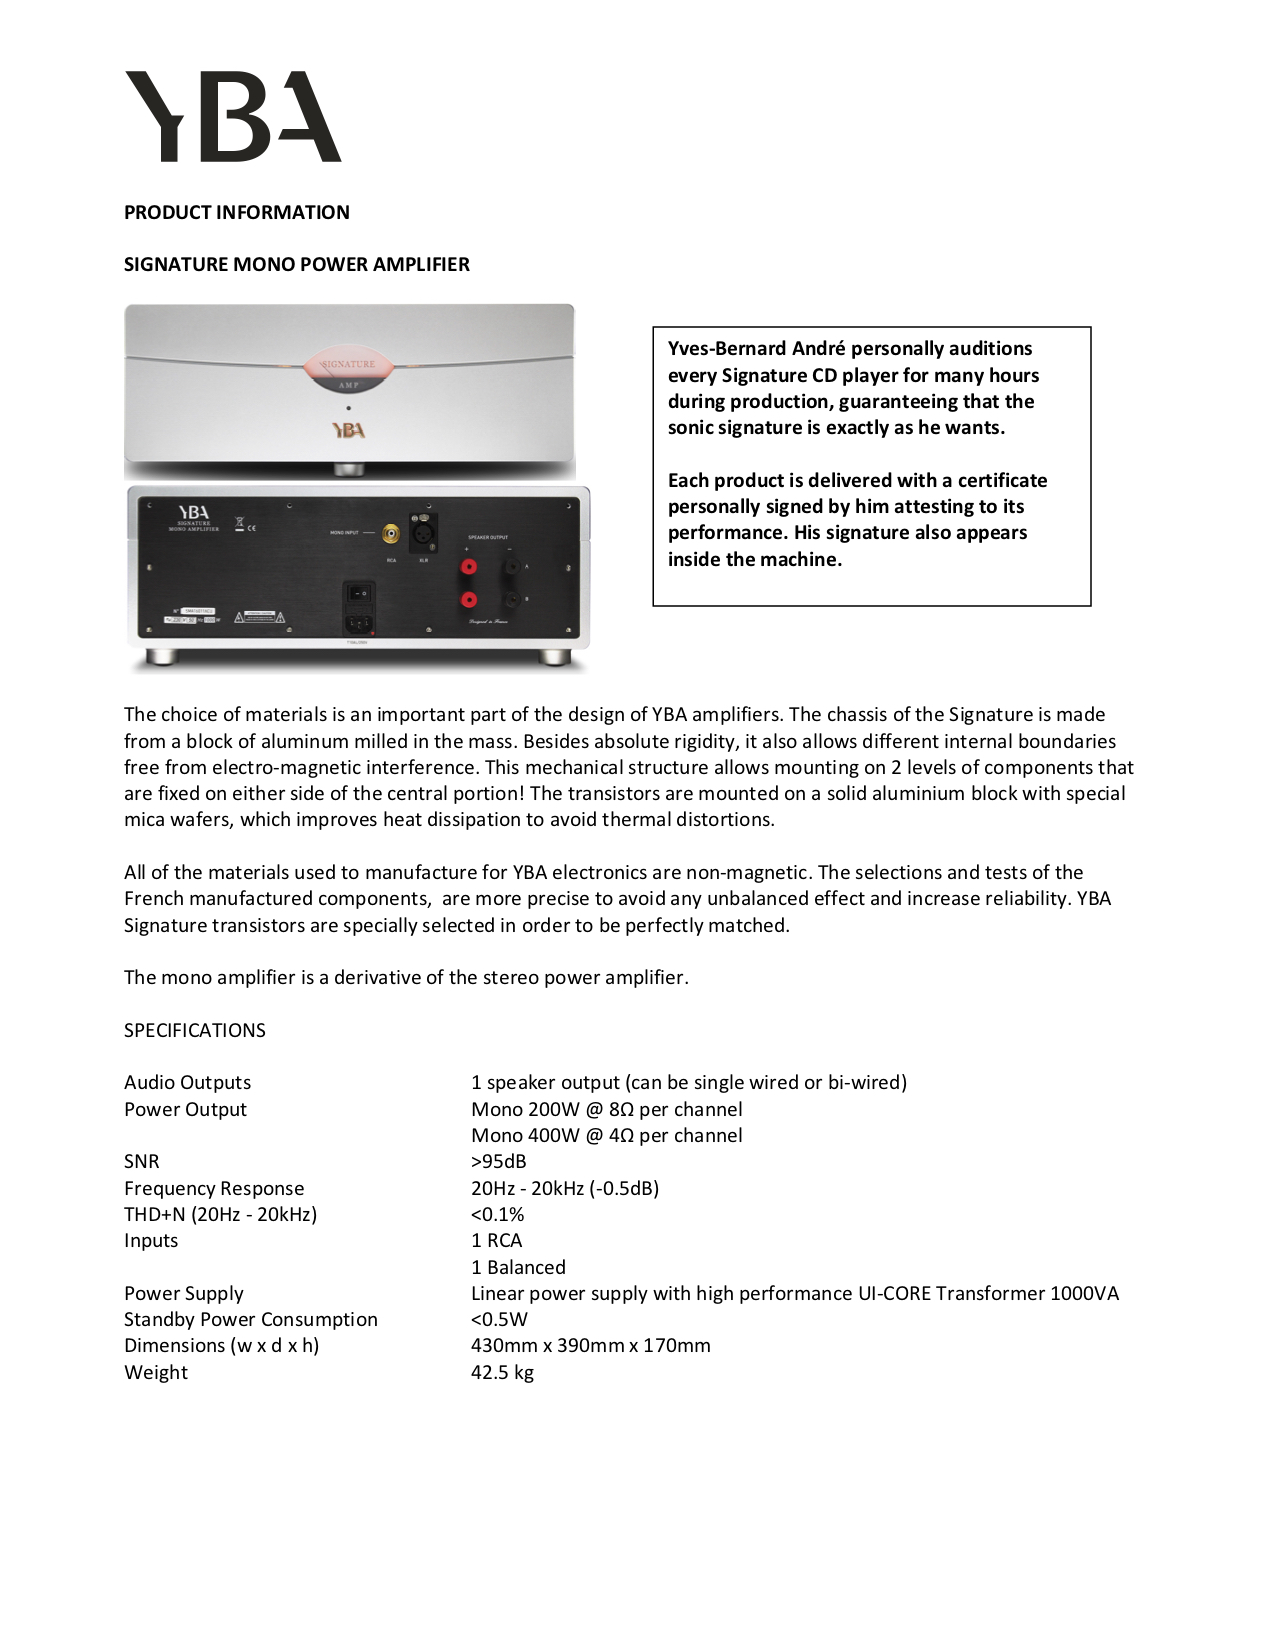 YBA Signature Mono Amplifier Info Sheet - Norman Audio